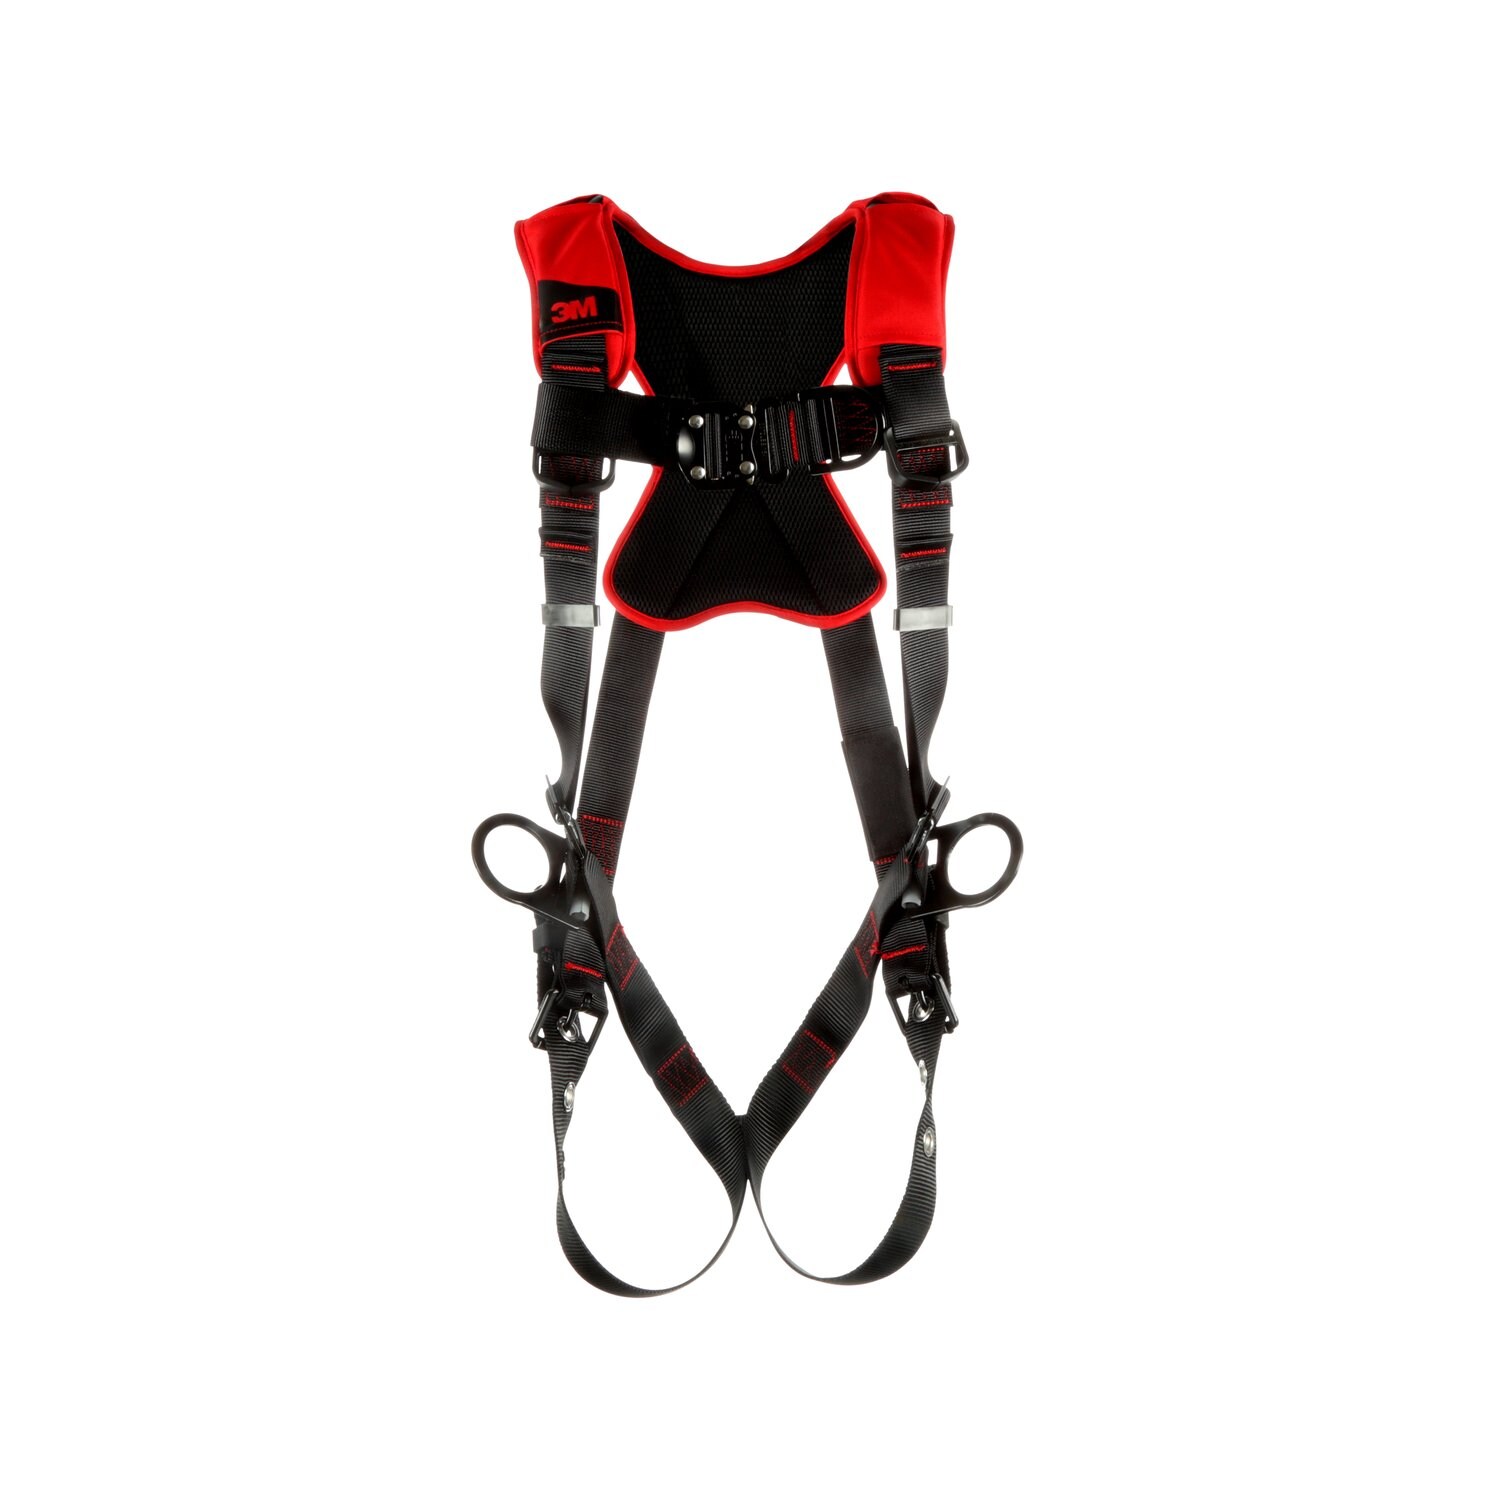 7012816723 - 3M Protecta P200 Comfort Vest Climbing/Positioning Safety Harness 1161440, Medium/Large